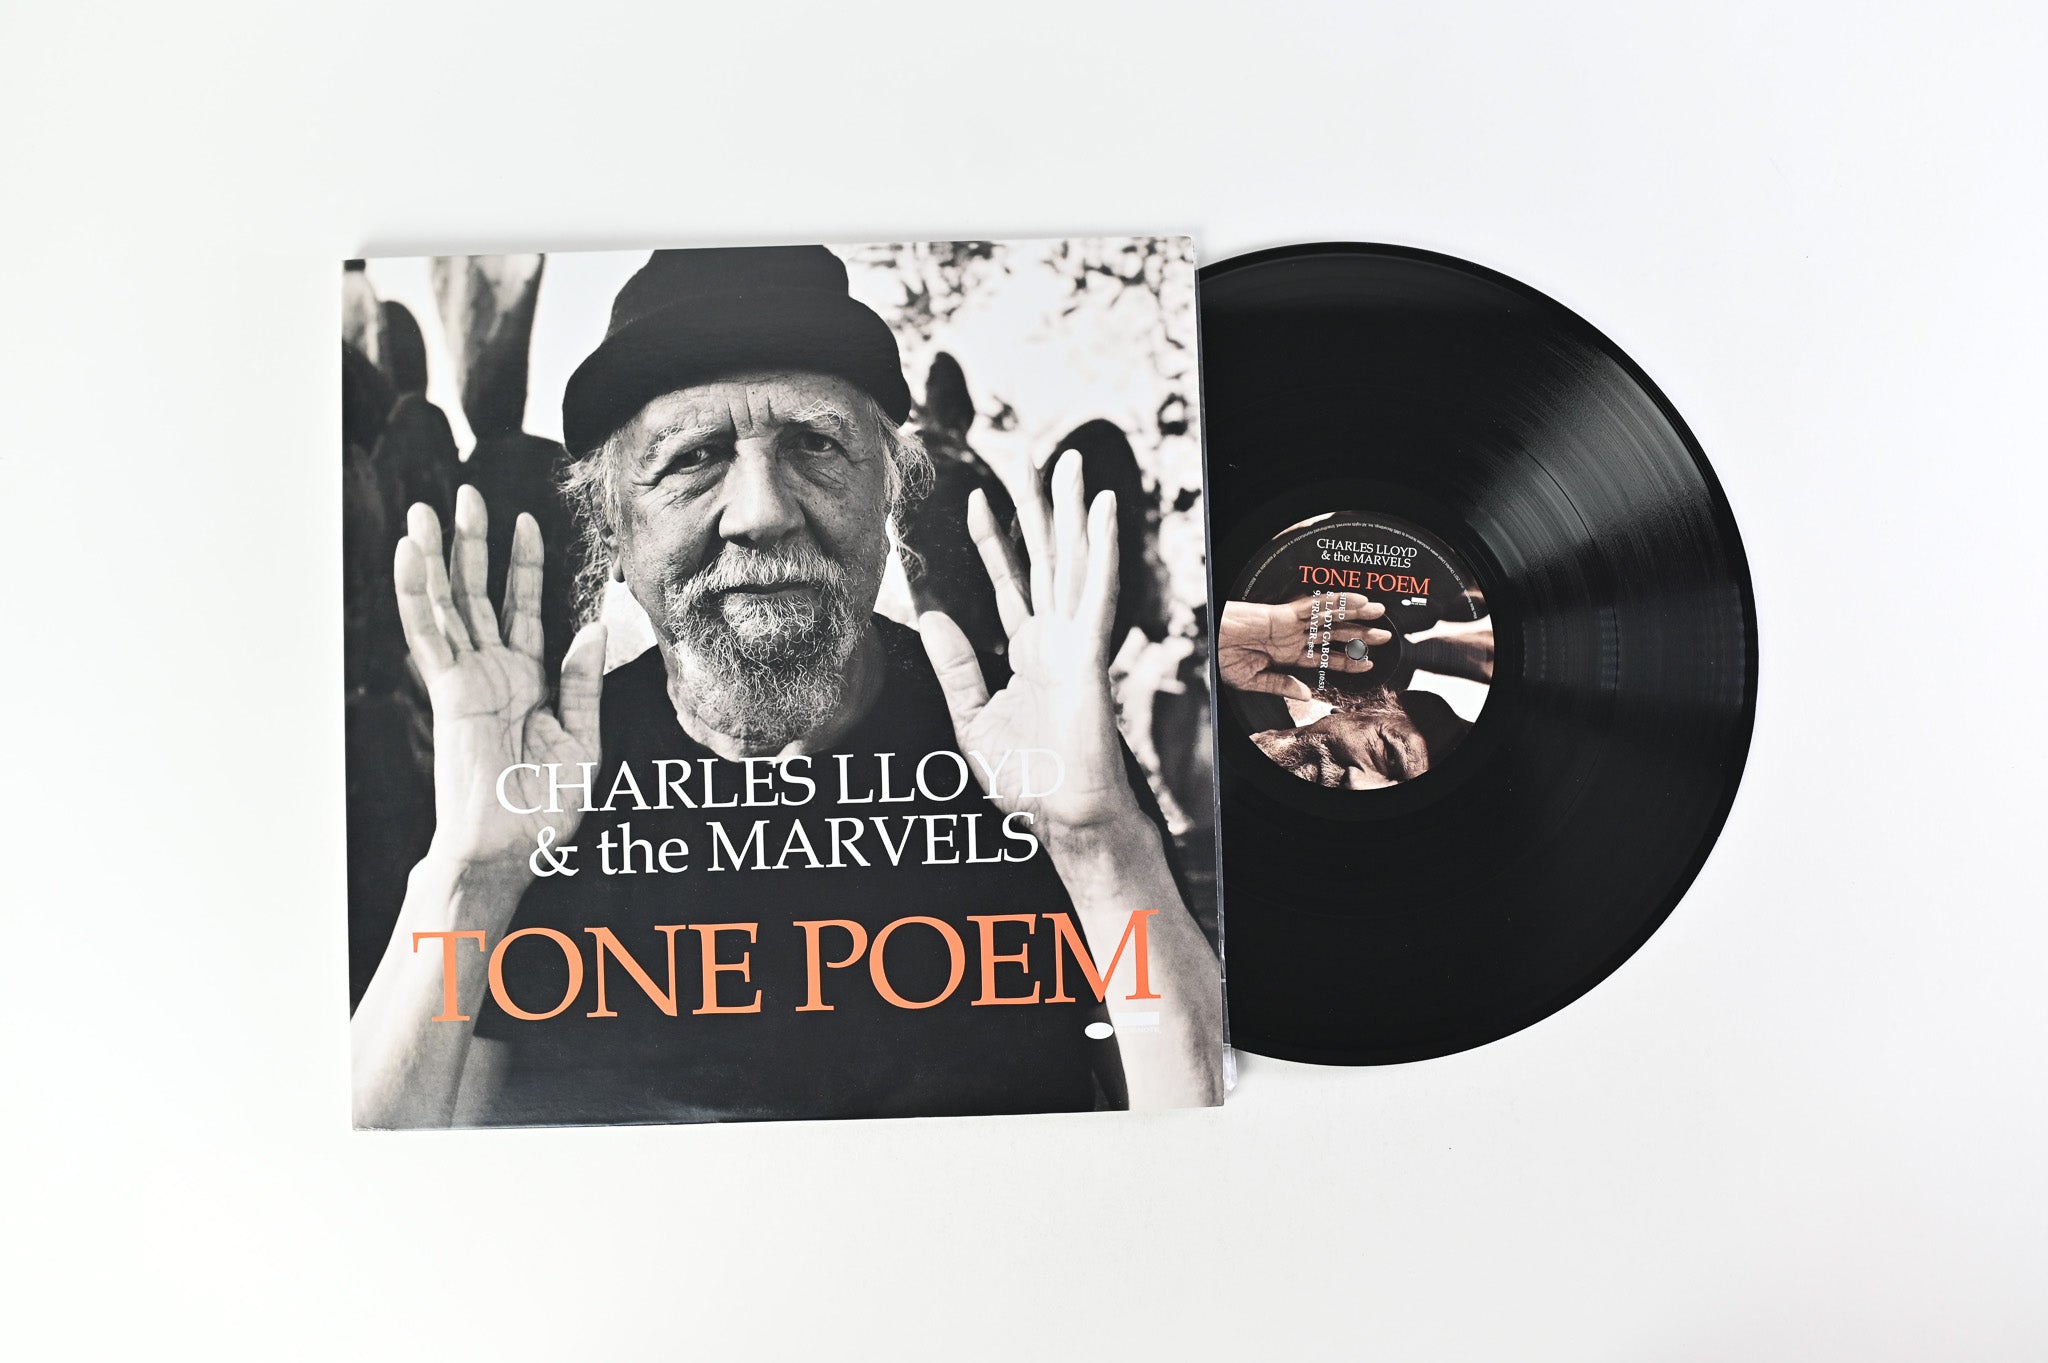 Charles Lloyd & The Marvels - Tone Poem on Blue Note Tone Poem Series 180 Gram